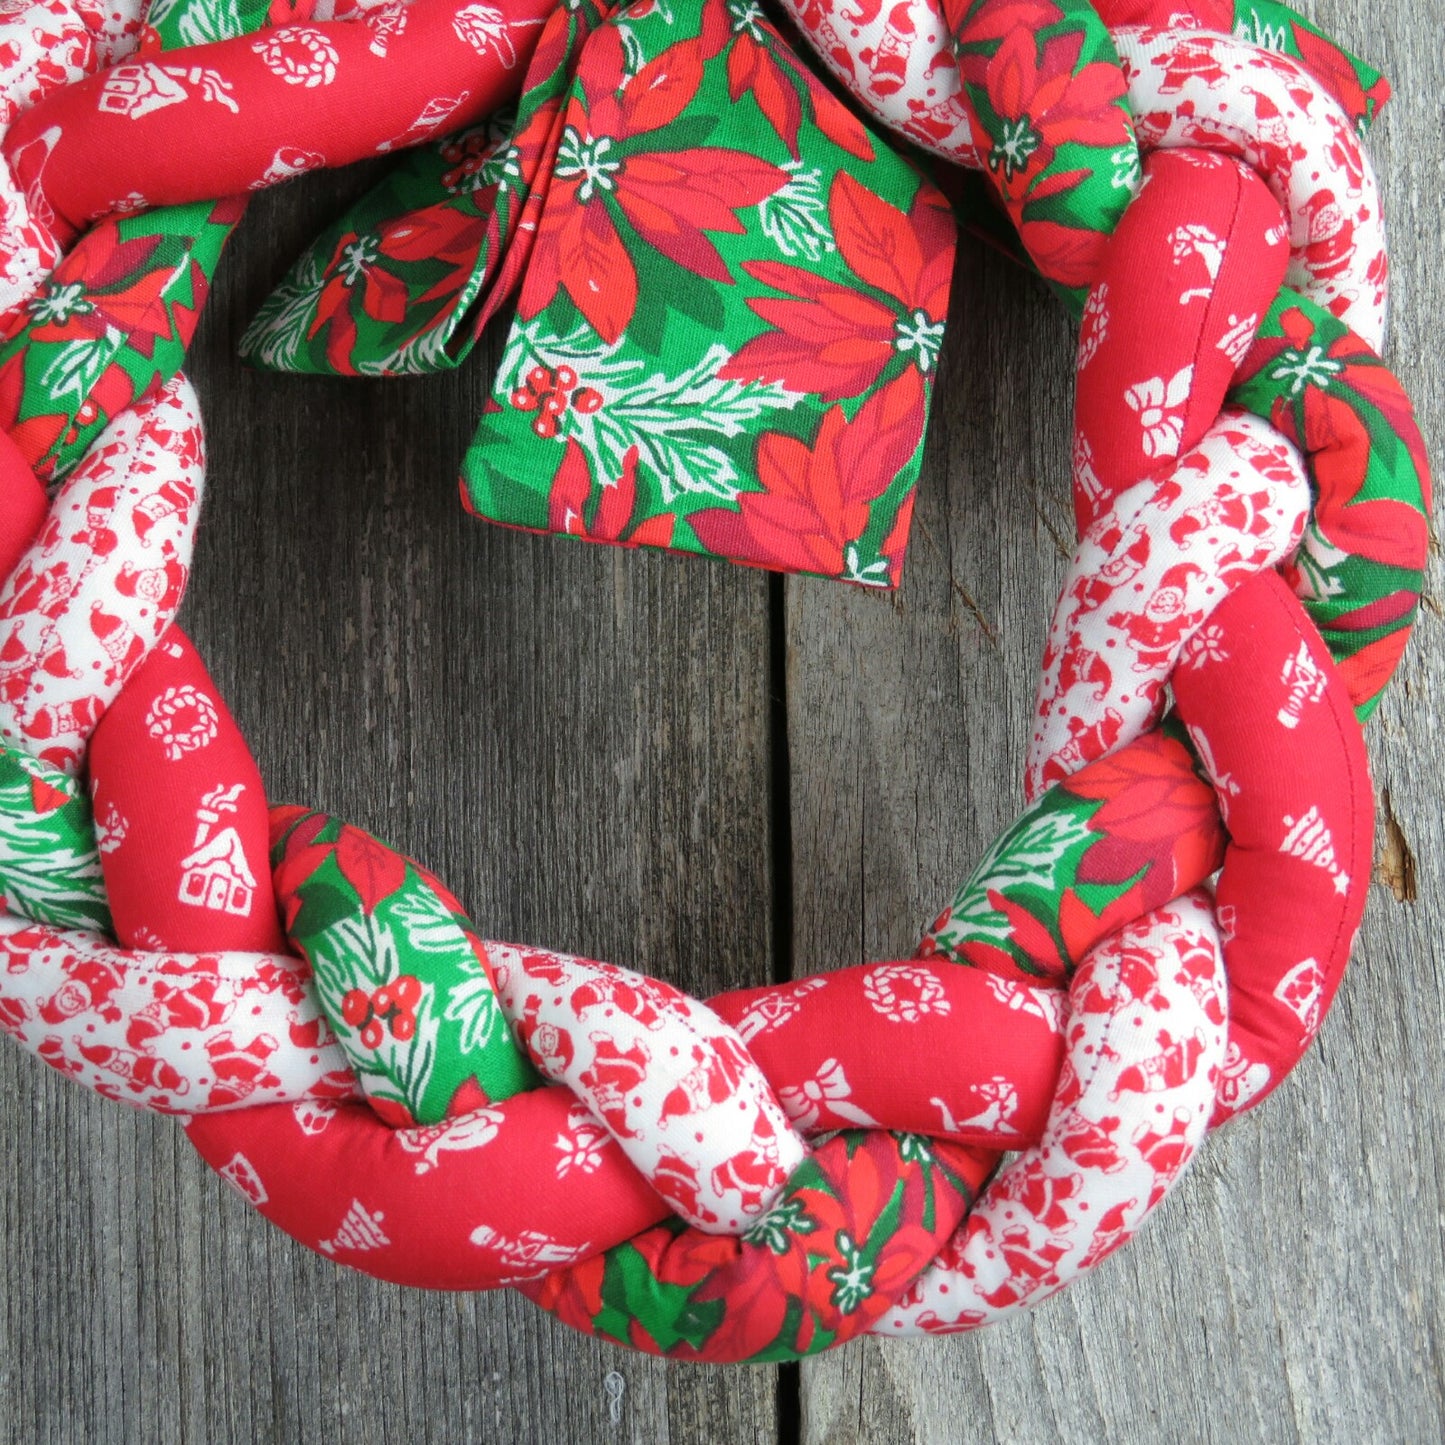 Vintage Handmade Christmas Wreath Twisted Fabric Red Green Santa Poinsettia Holiday Decor Door Hanger - At Grandma's Table